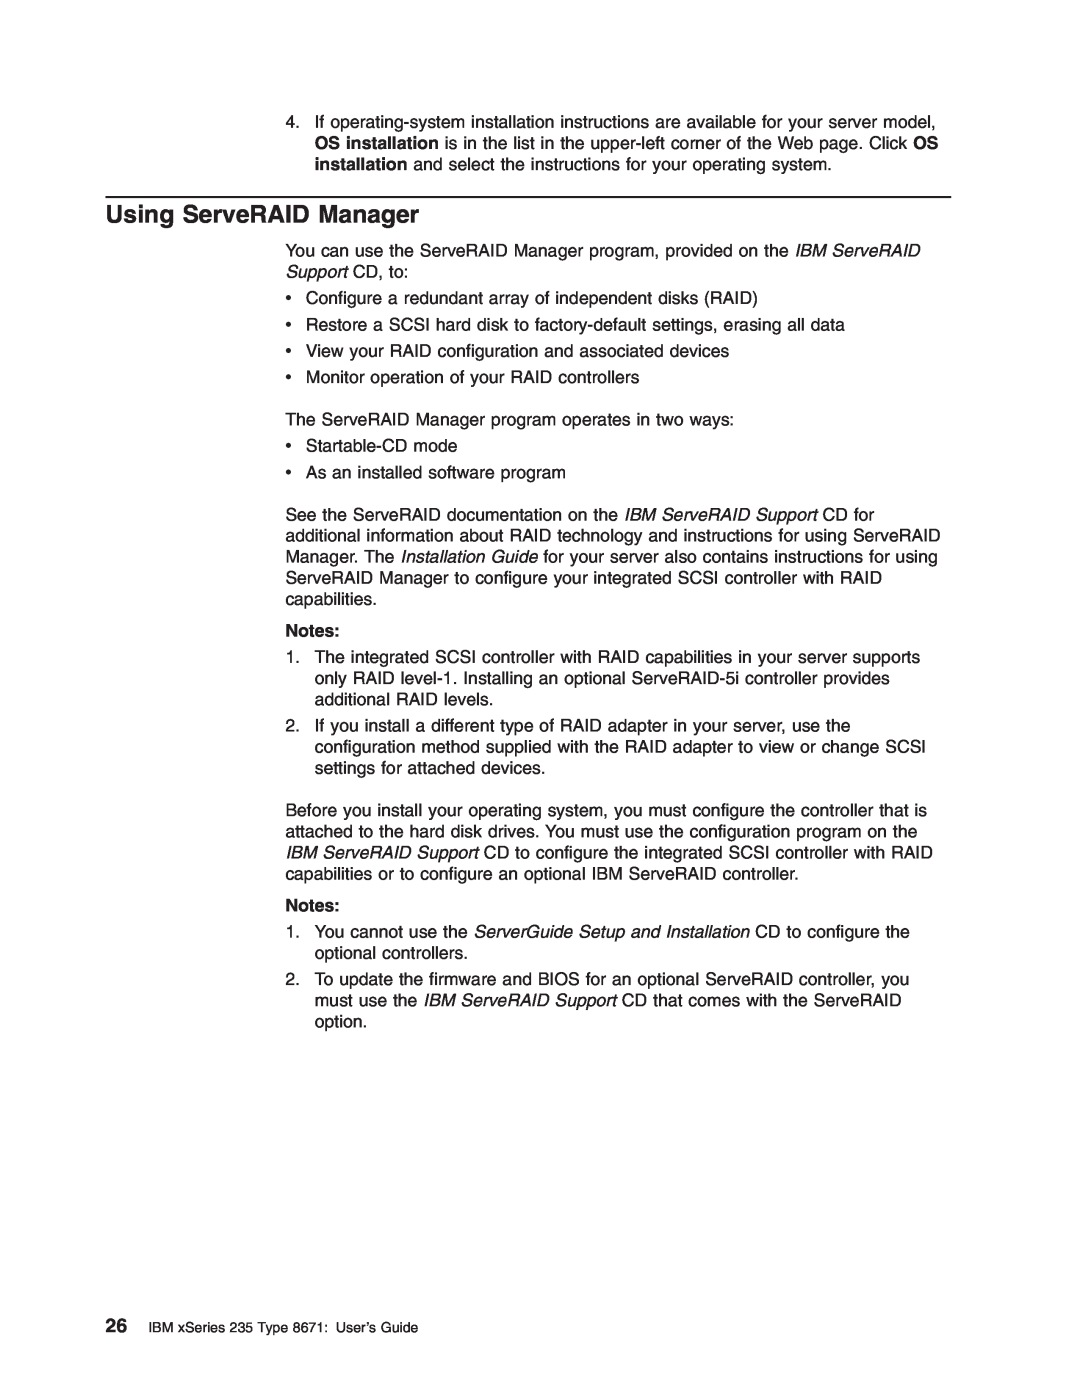 IBM manual Using ServeRAID Manager, IBM xSeries 235 Type 8671 User’s Guide 